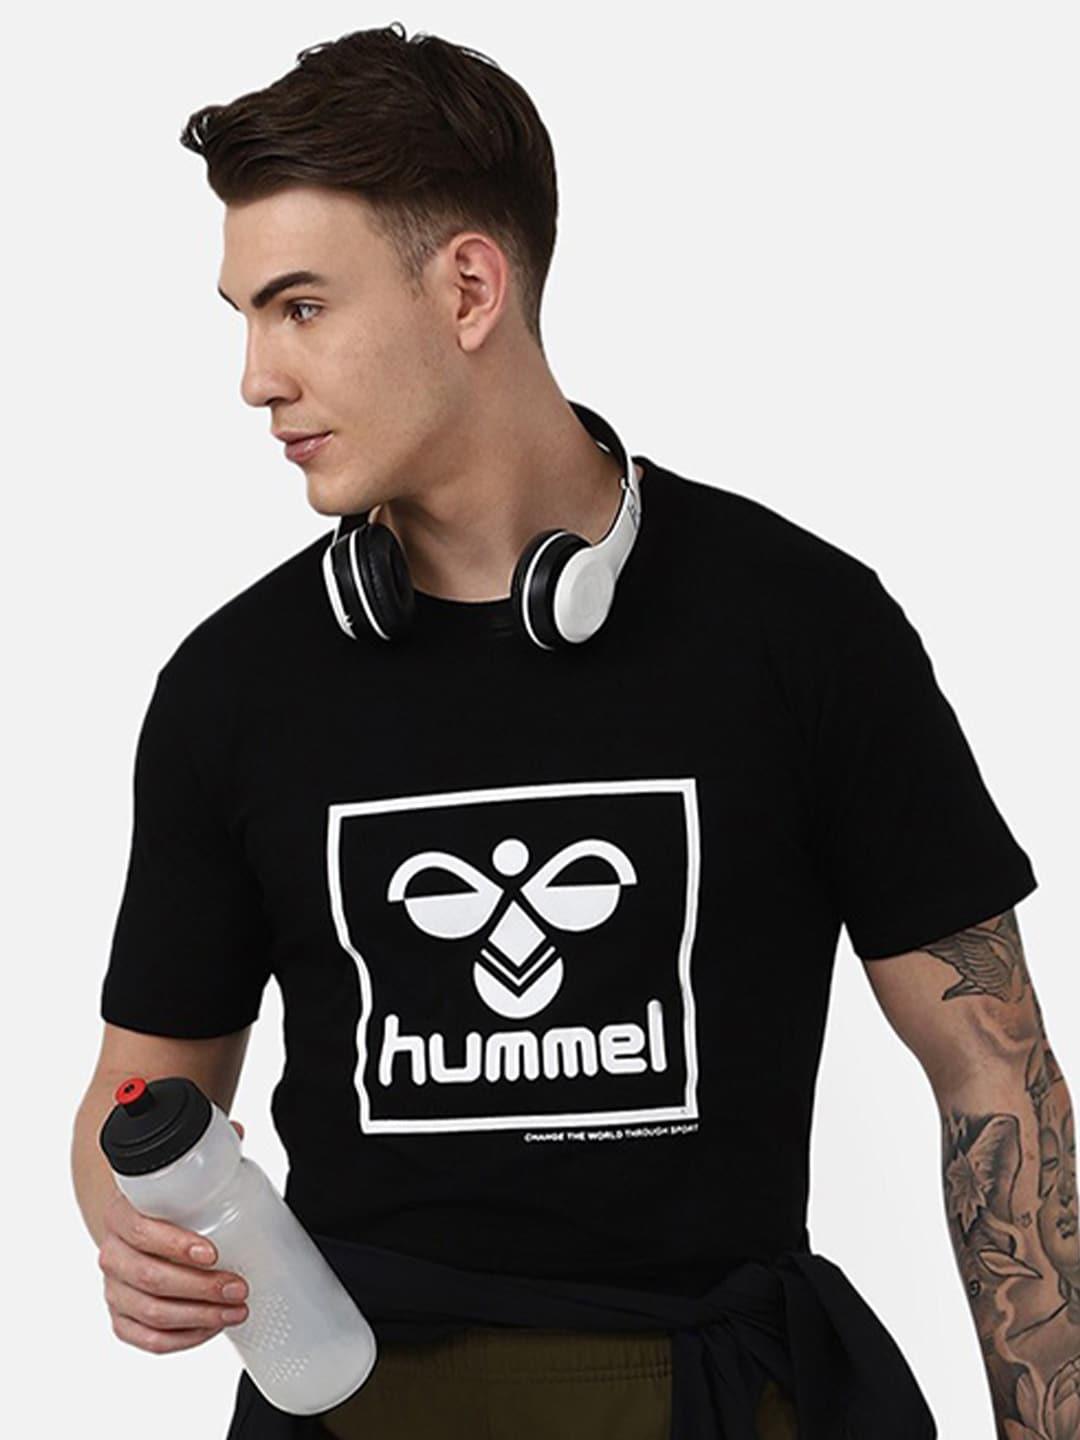 hummel graphic printed round neck cotton sports t-shirt